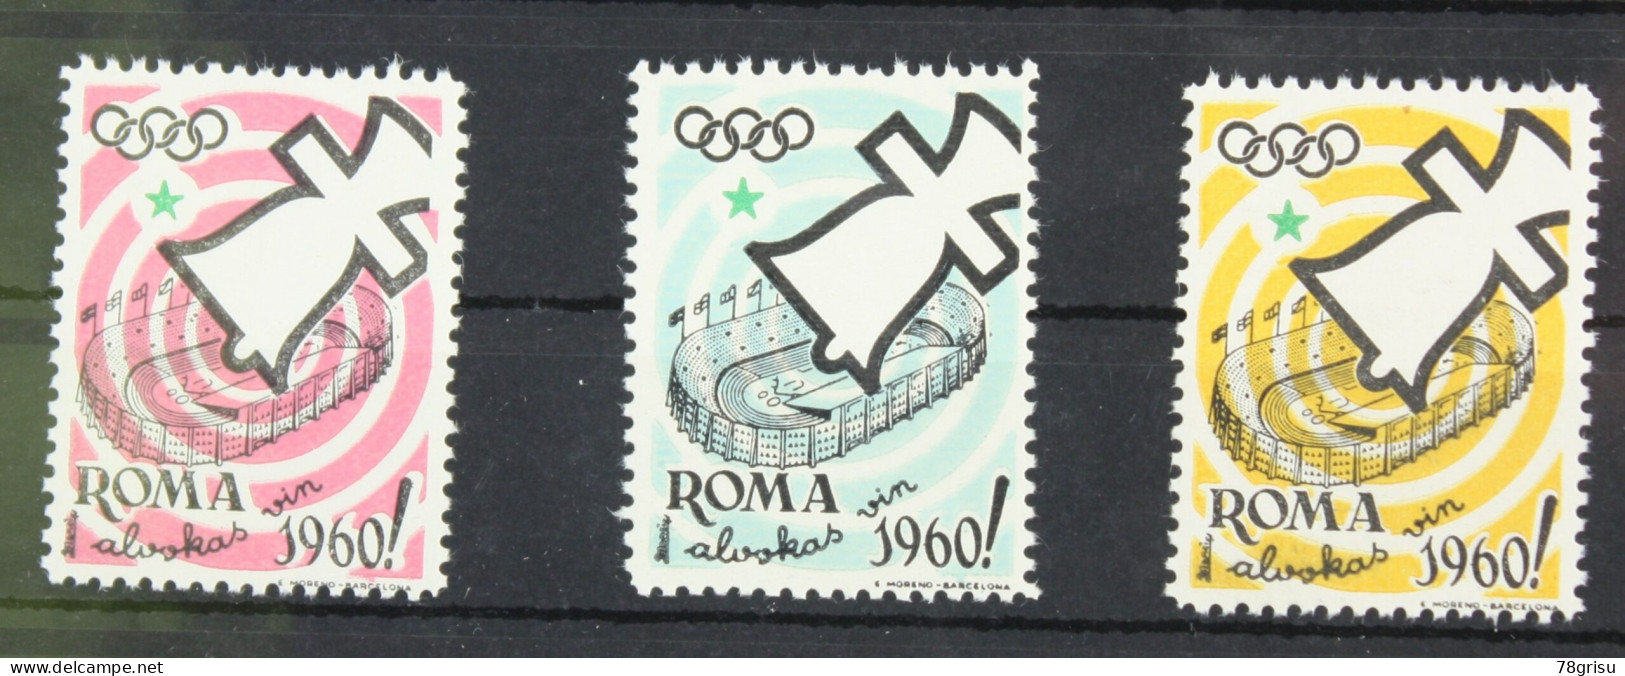 Olympic Games Roma Rom 1960 Poster Stamp Cinderella Vignette Sport Reklamemarke  - Verano 1960: Roma